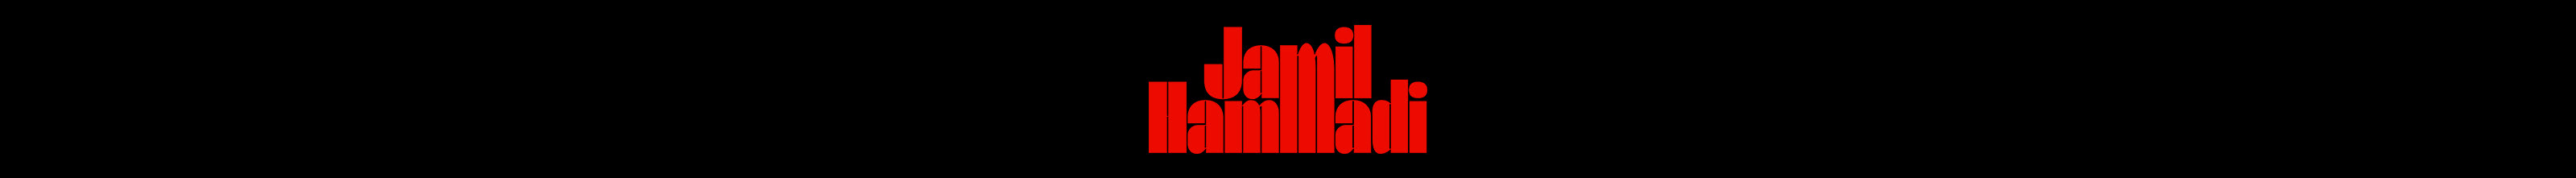 Jamil Hammadi's profile banner